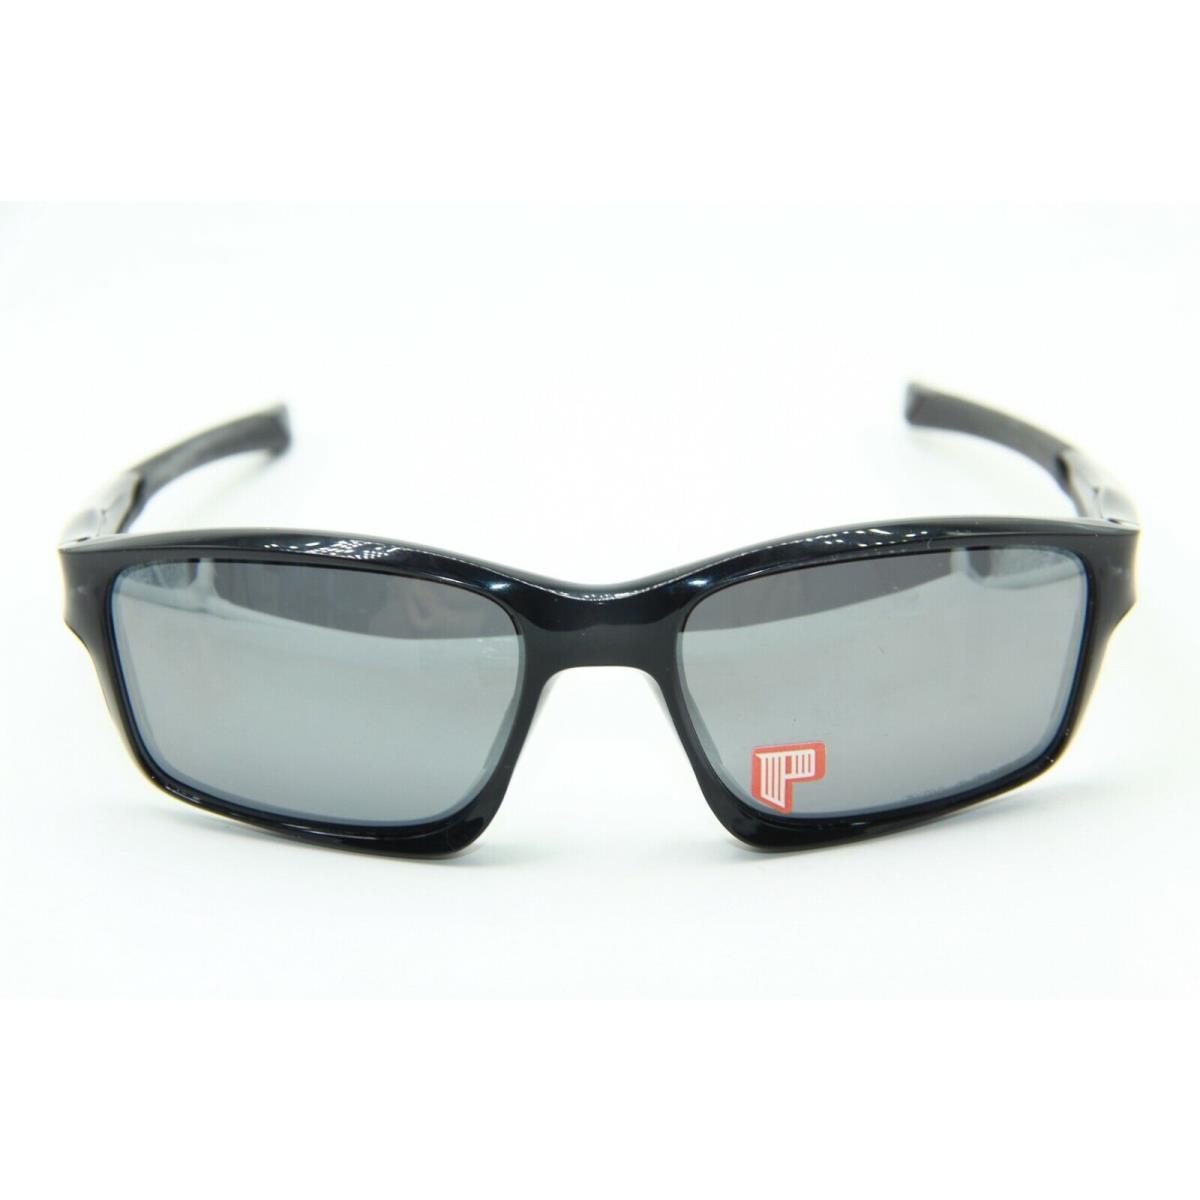 Oakley sunglasses CHAINLINK - BLACK Frame, GREY Lens 0